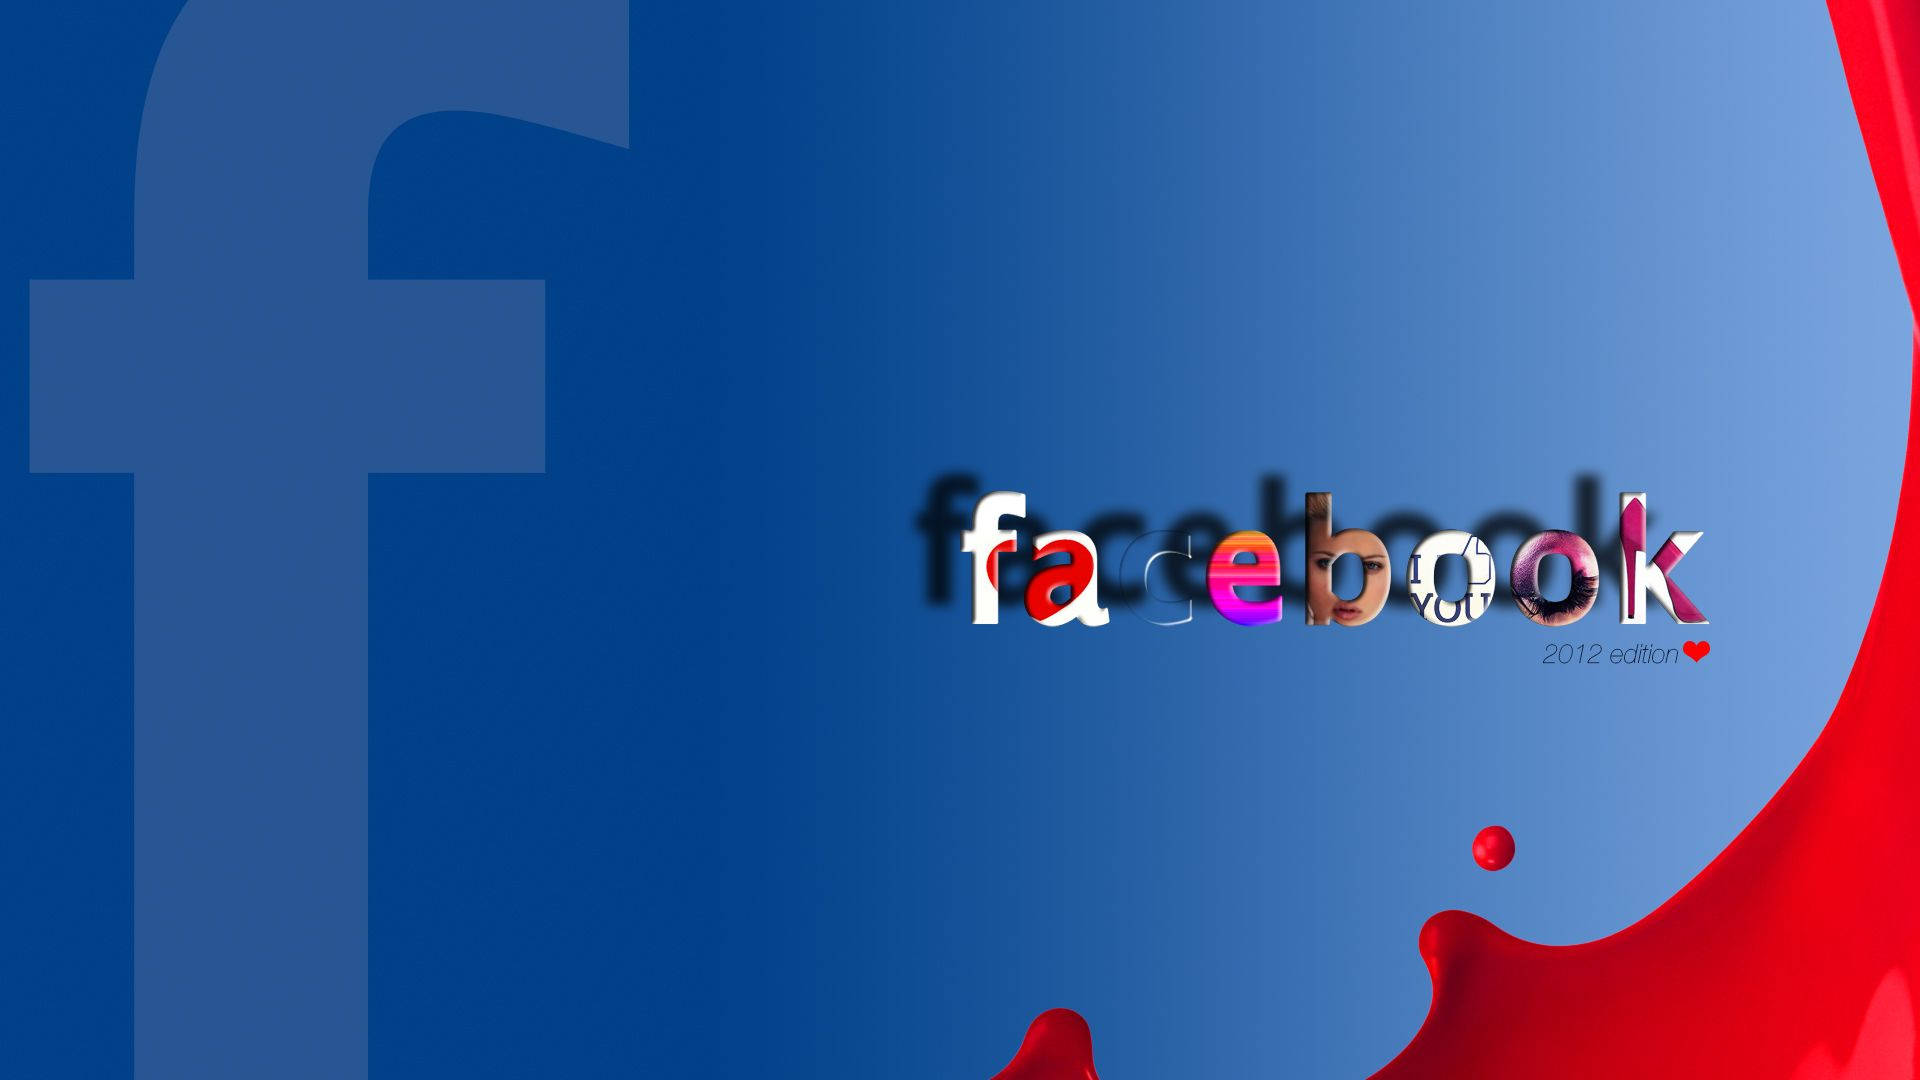 Red Blue Facebook Background Wallpaper